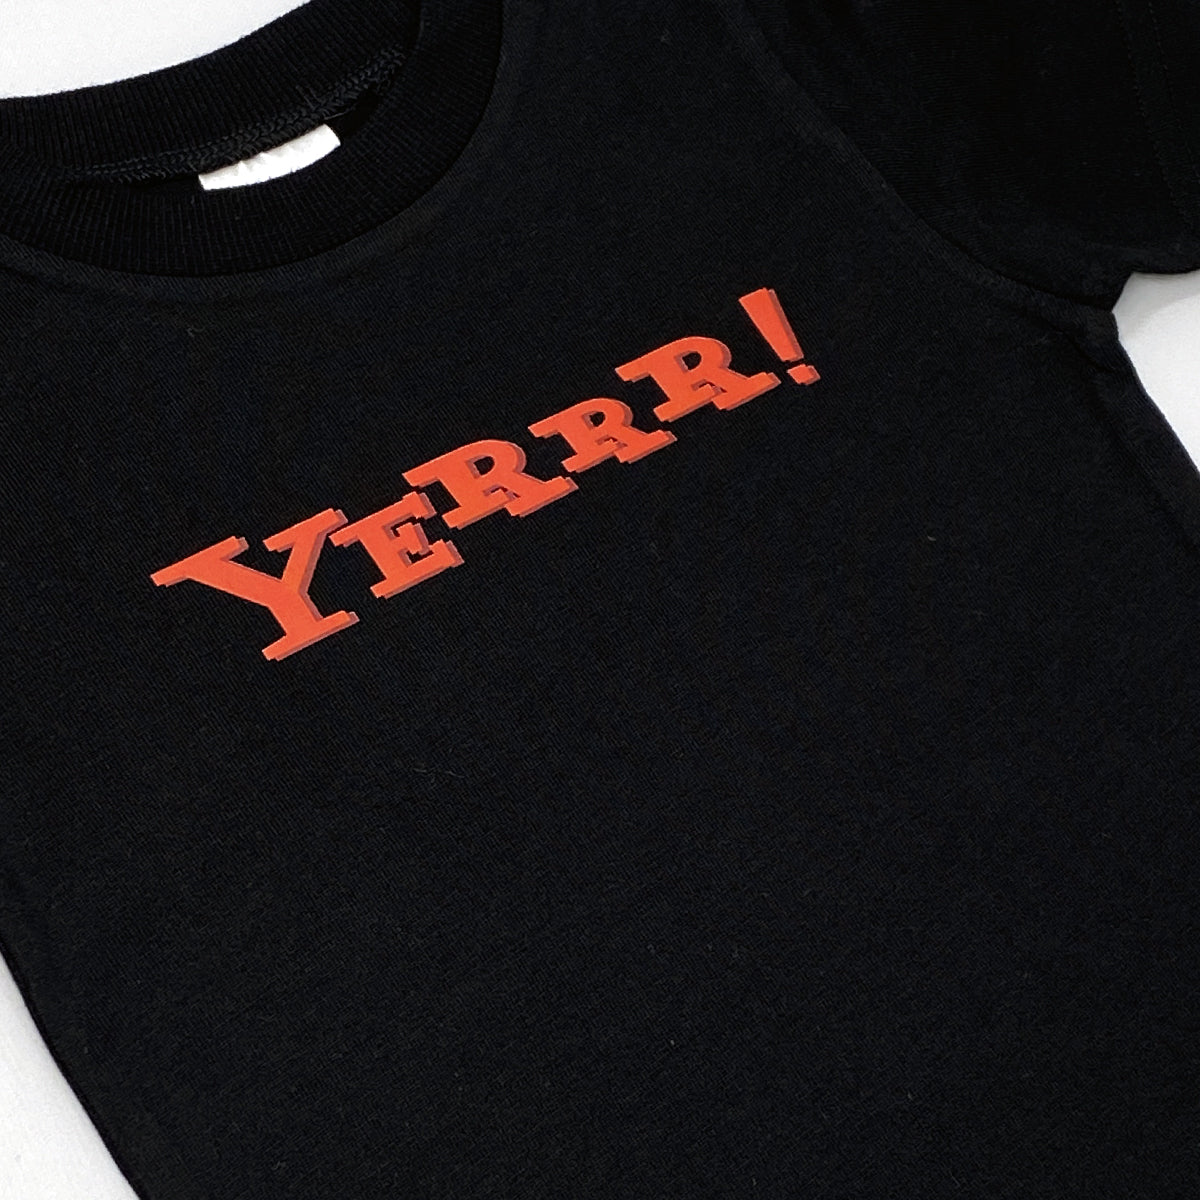 Yerrrhoo! T-shirt (Black)